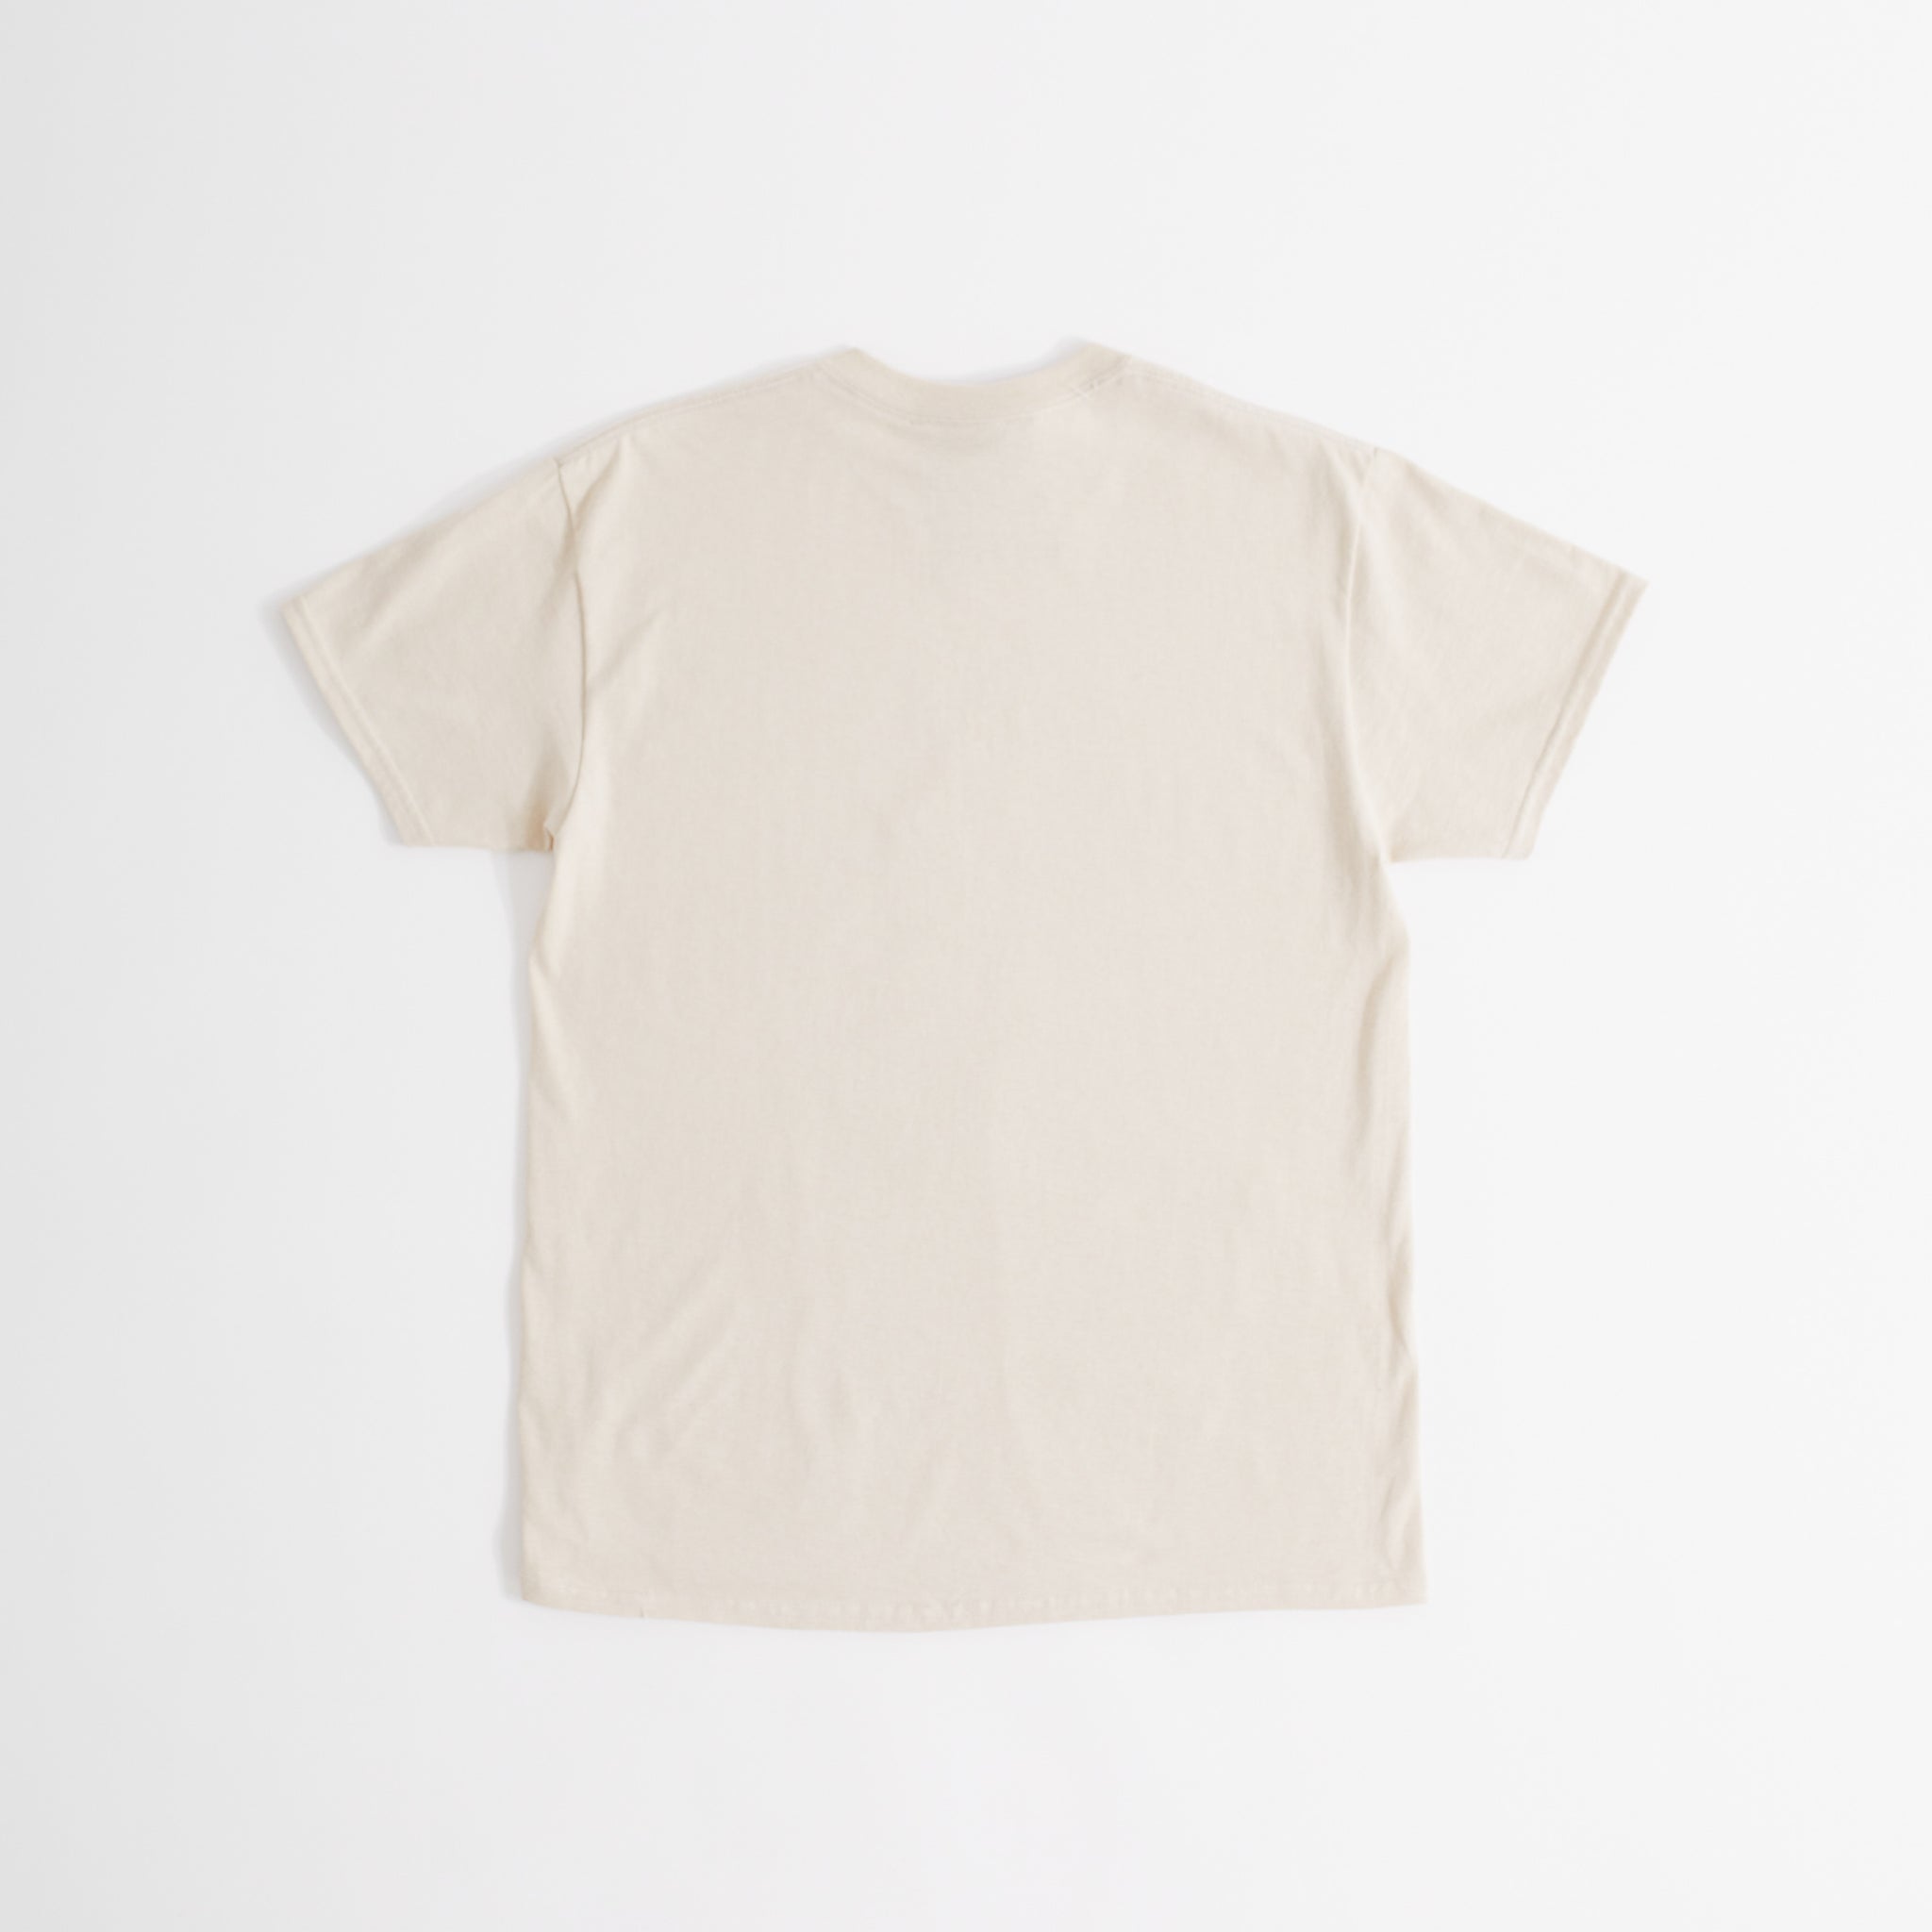 Perception S/S T-Shirt (Sand)